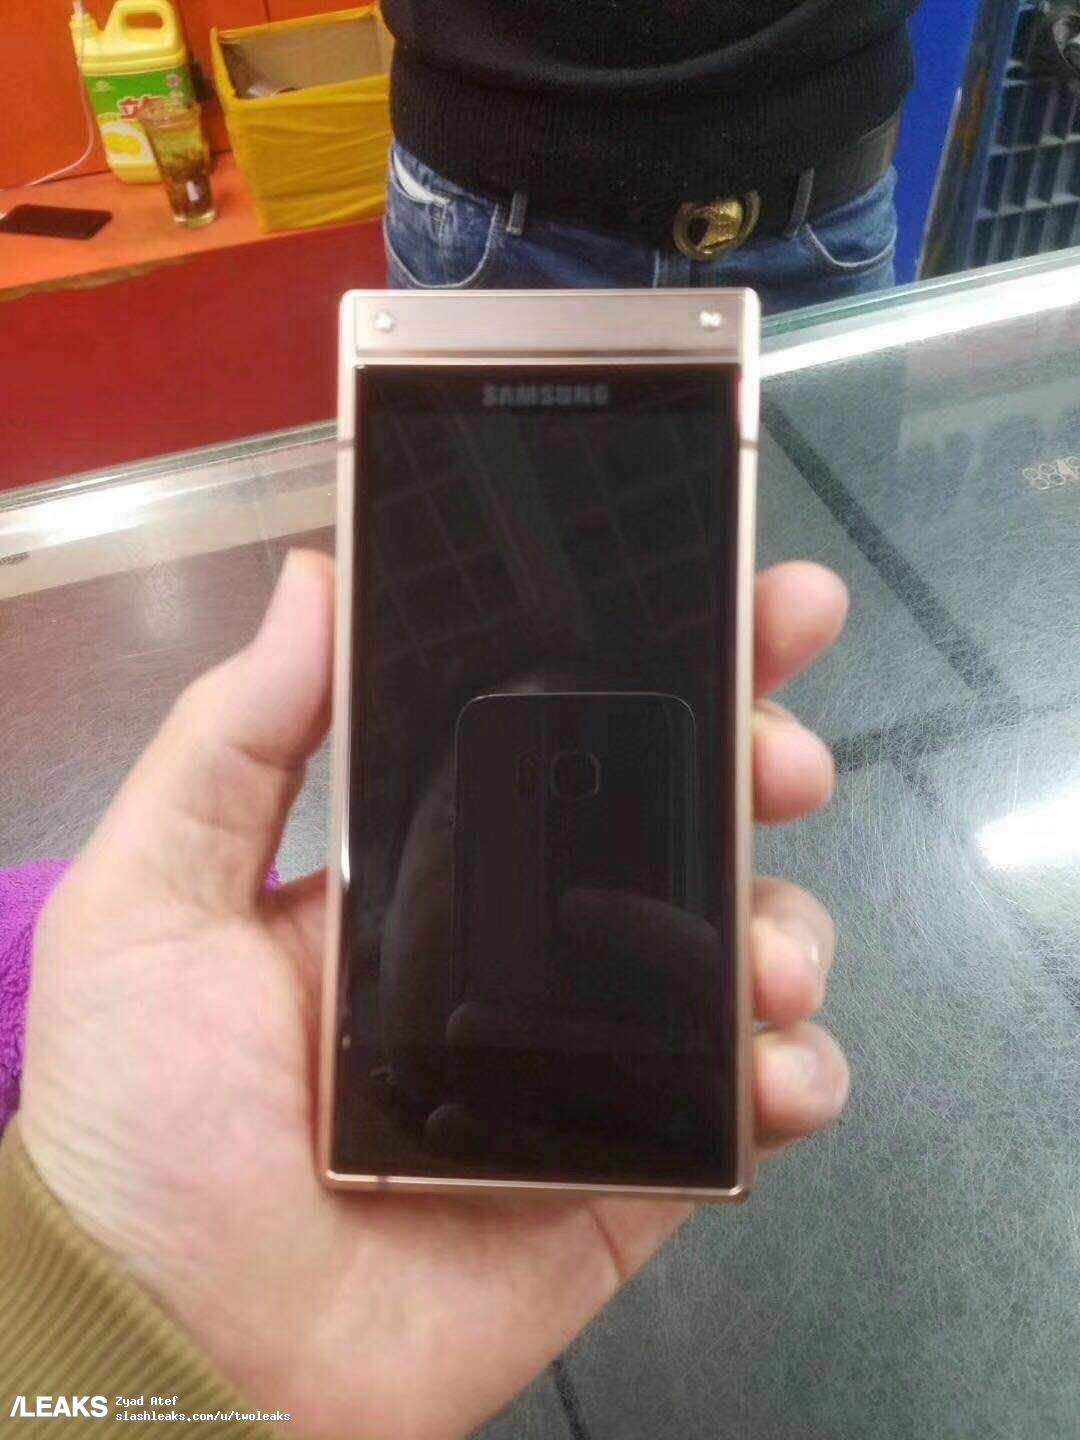 Samsung W2019 leaked photos